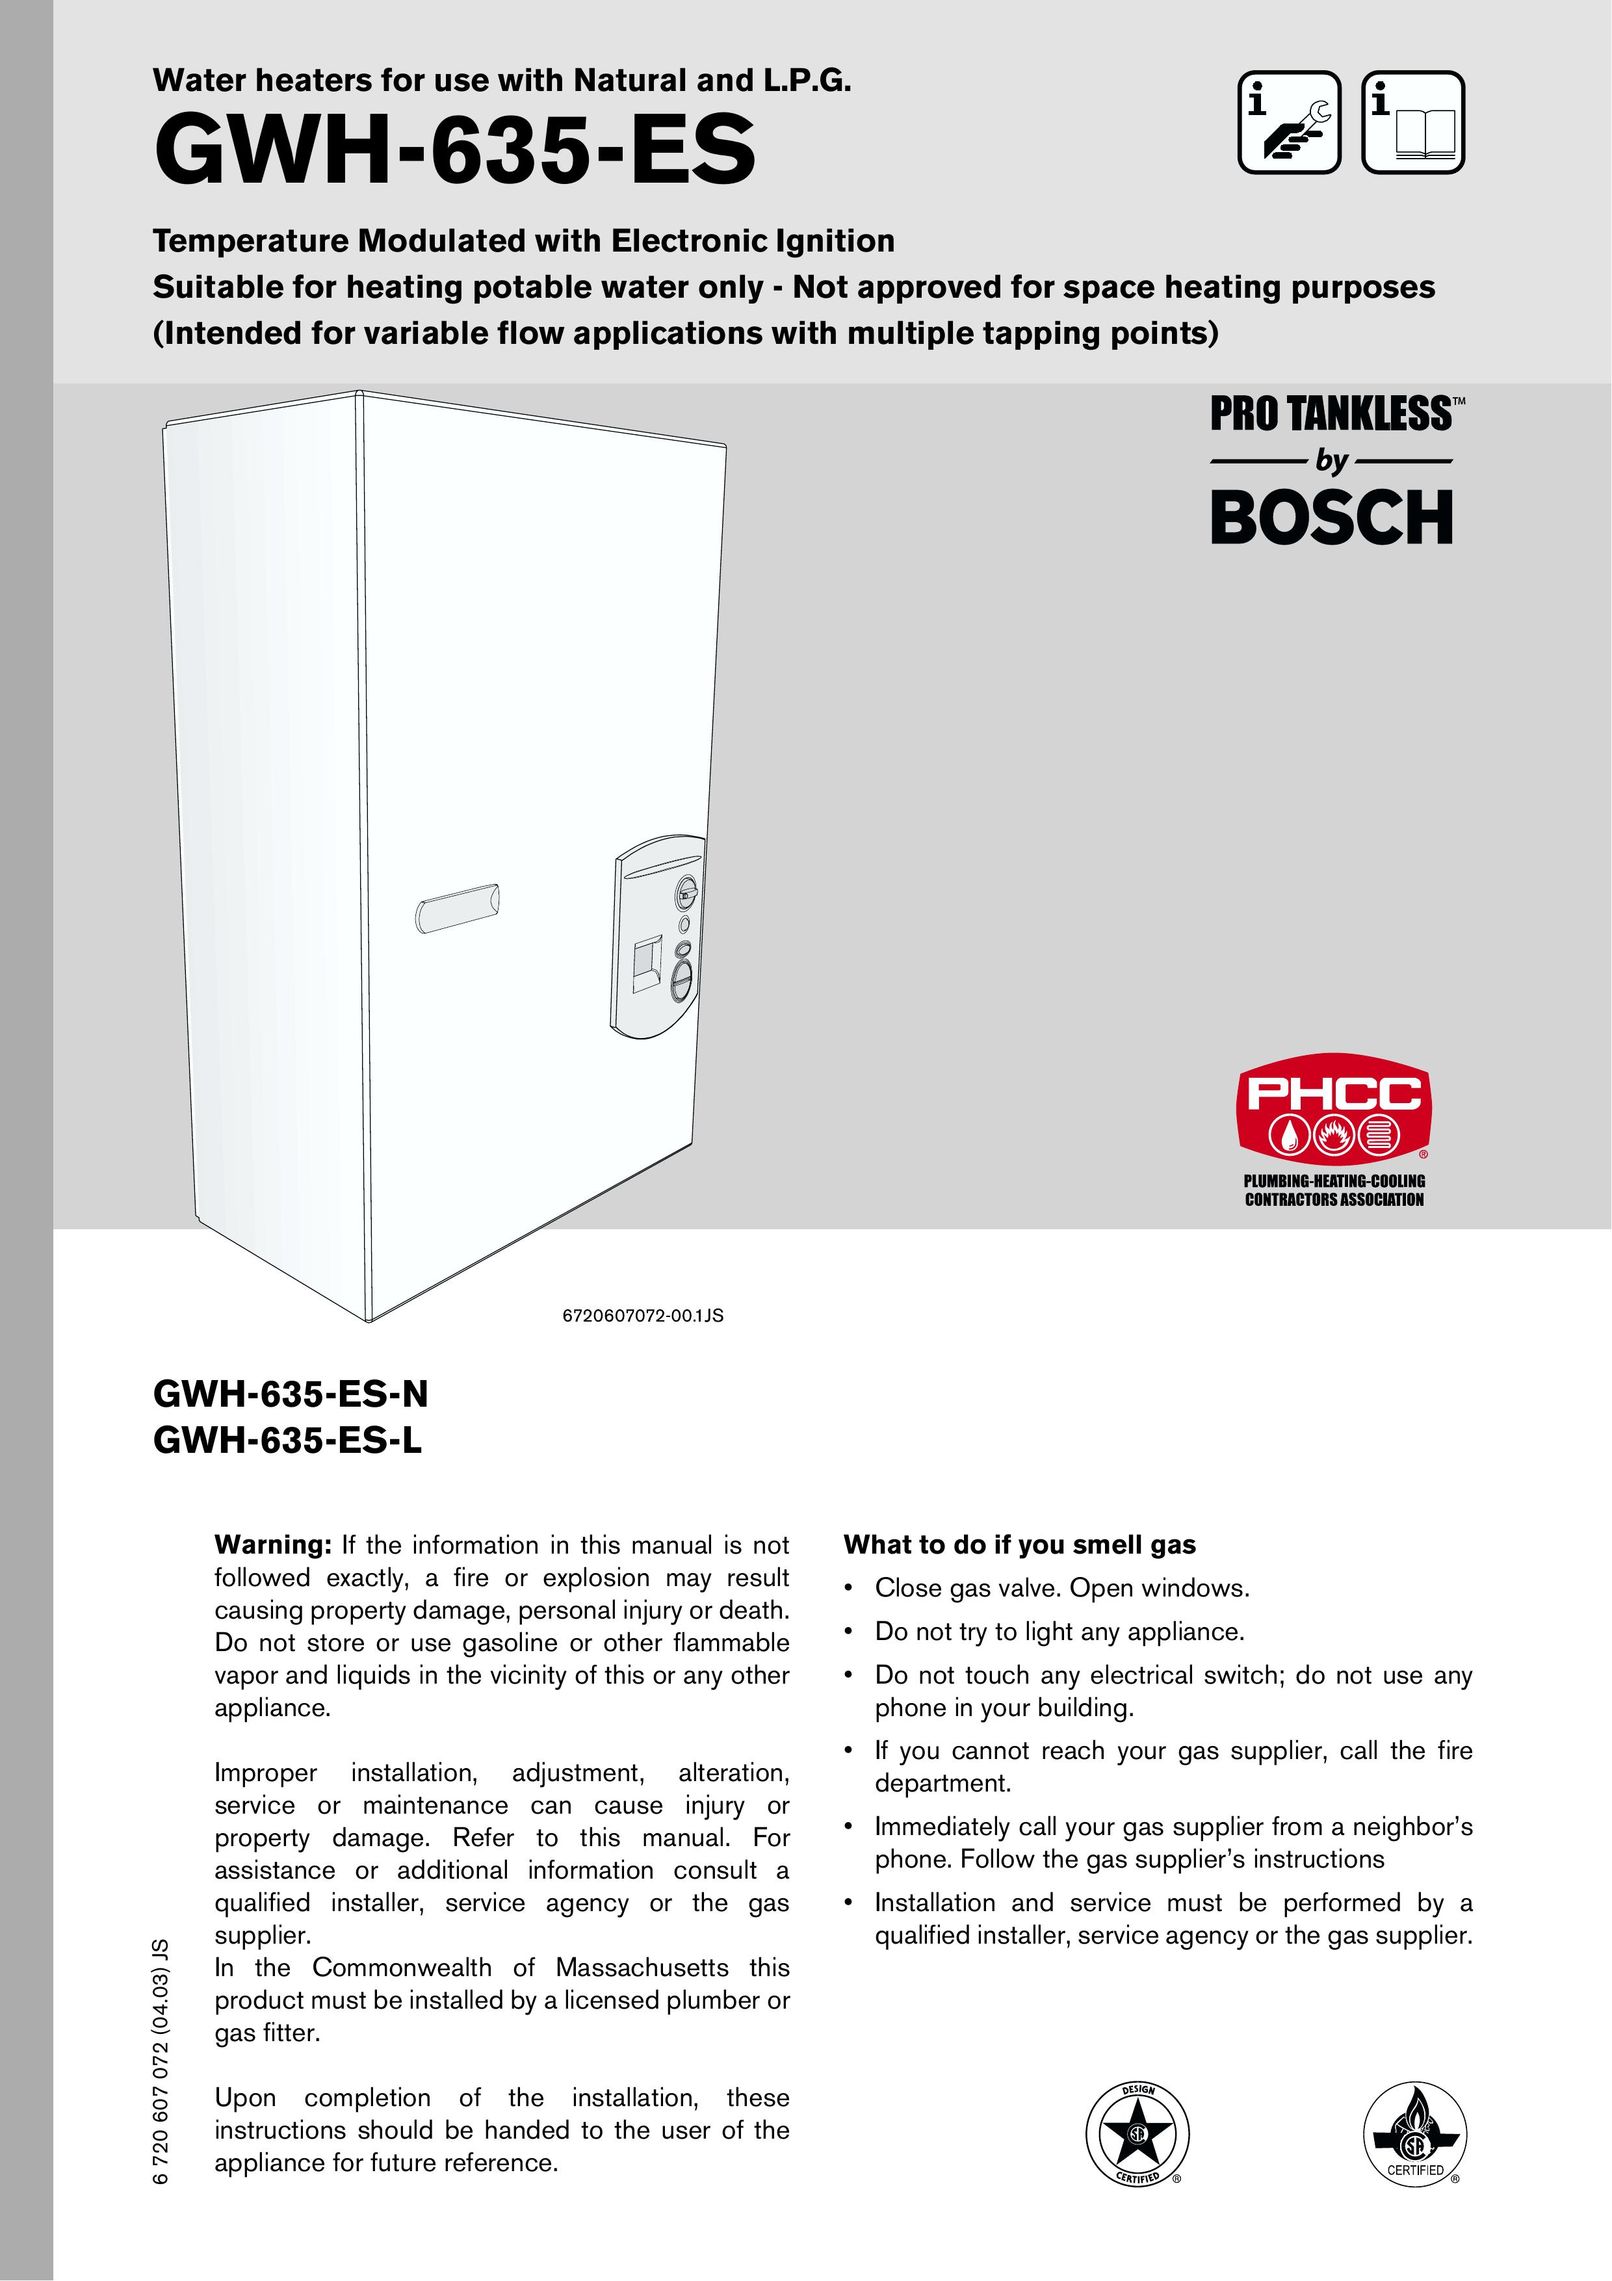 Bosch Appliances GWH-635-ES Water Heater User Manual